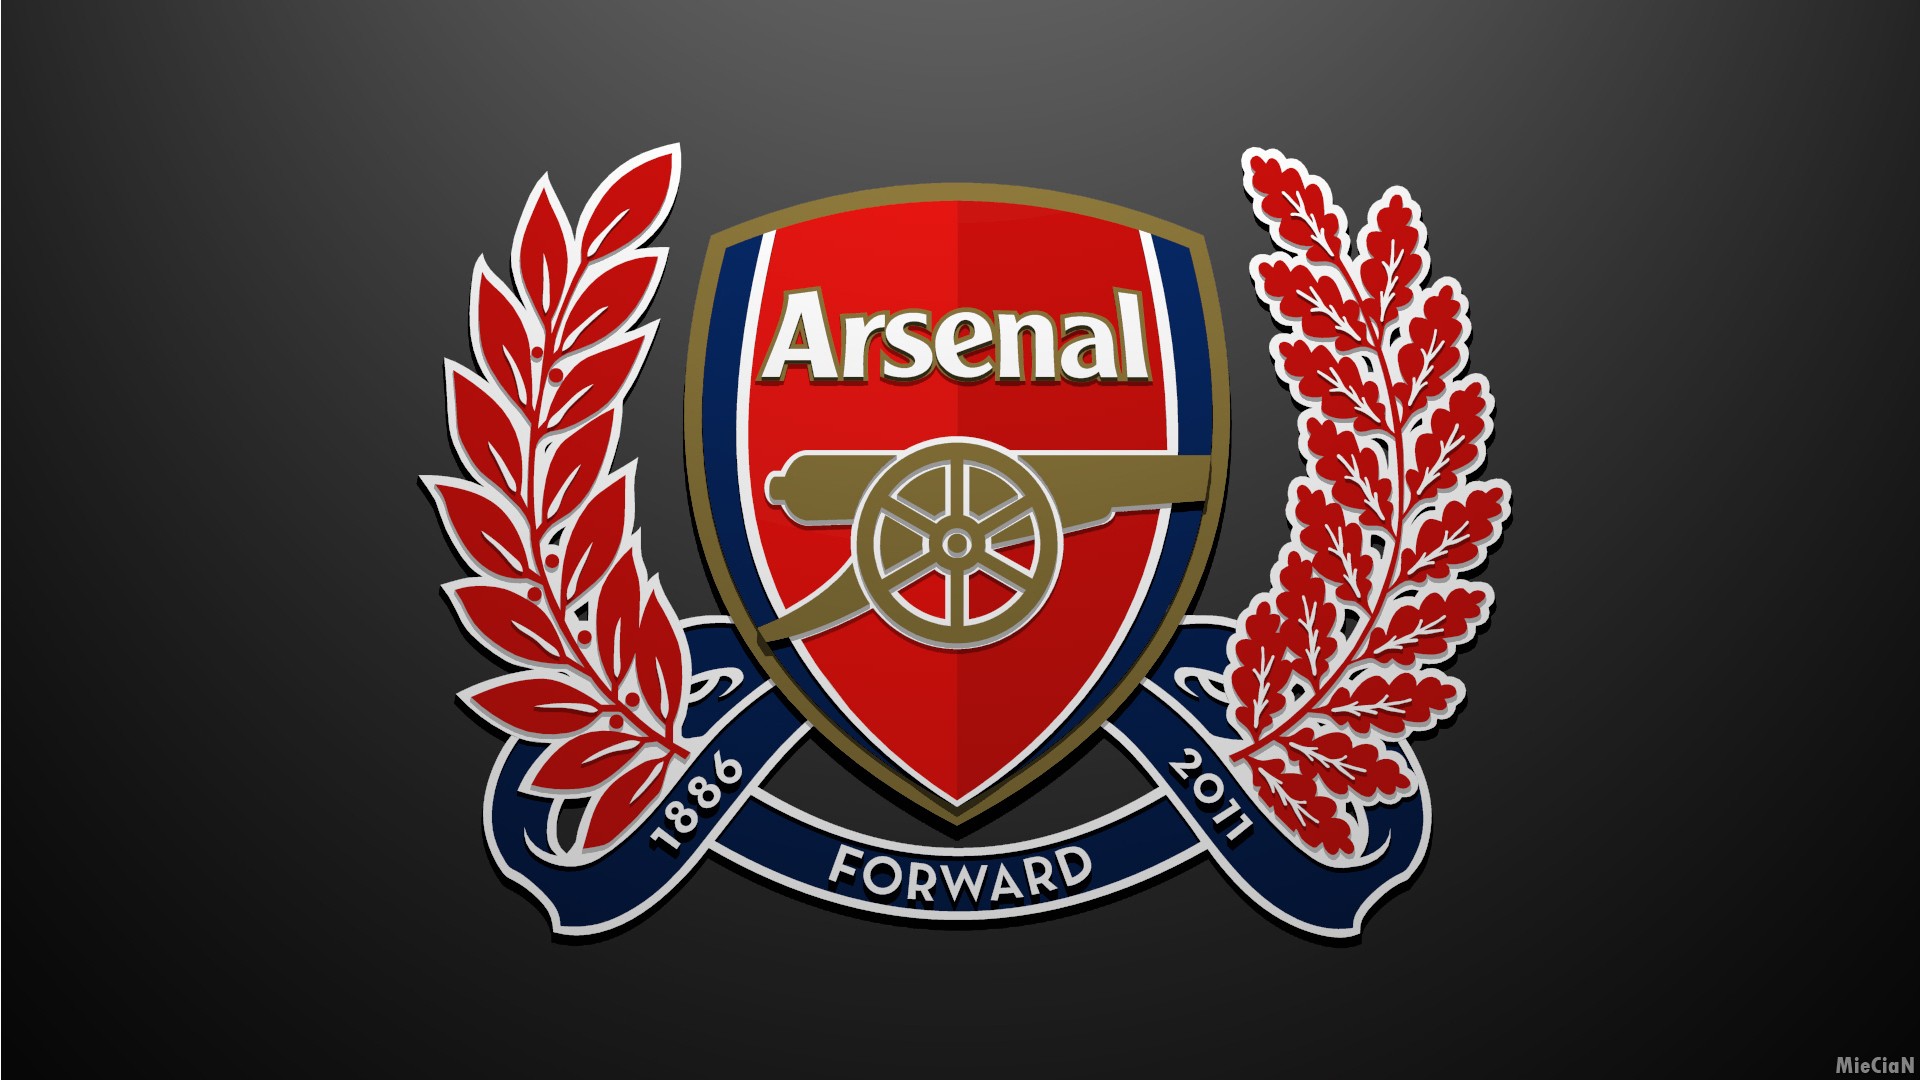 Cool Arsenal Football Club iPad Wallpaper